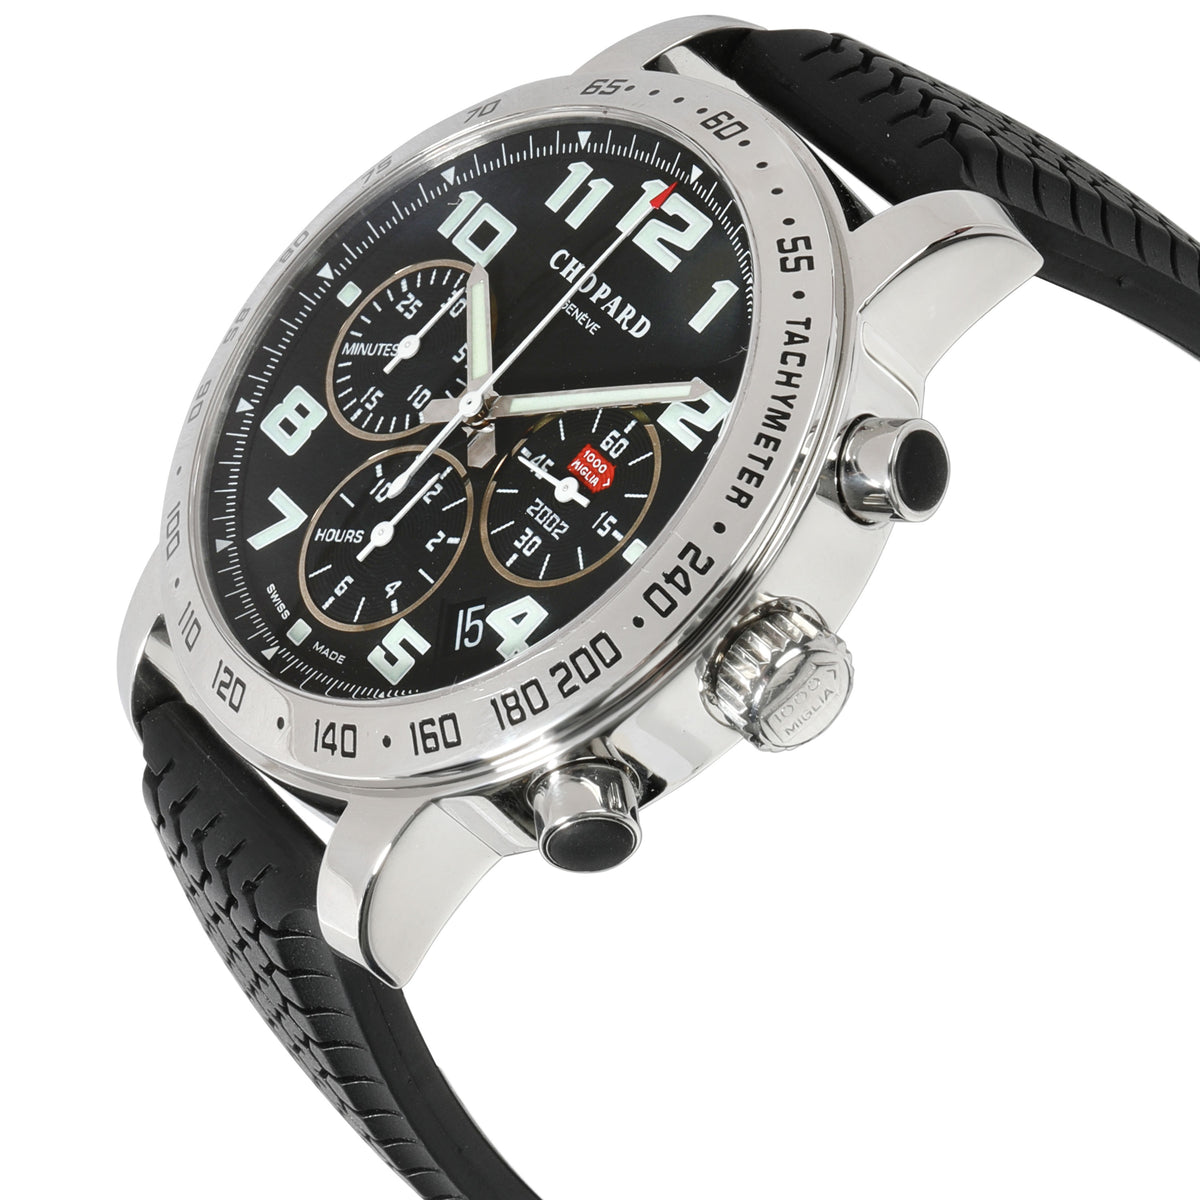 Chopard Mille Miglia 16/8920 Men's Watch in  Stainless Steel